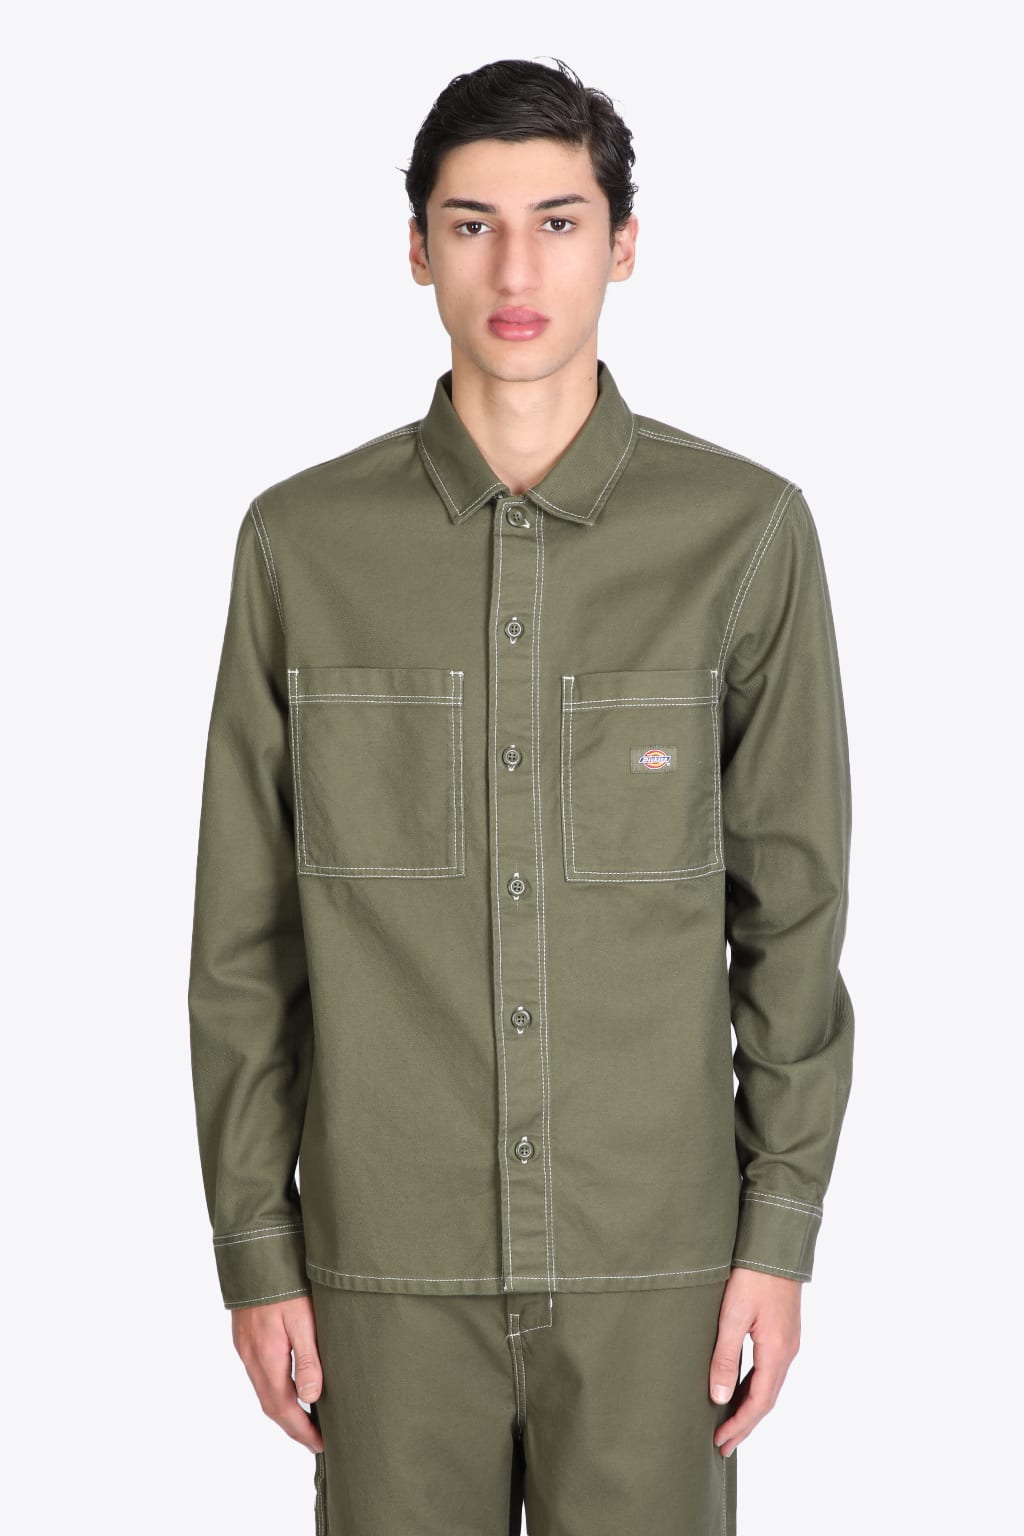 Dickies Florala Shirt Military green twill work shirt - Florala shirt